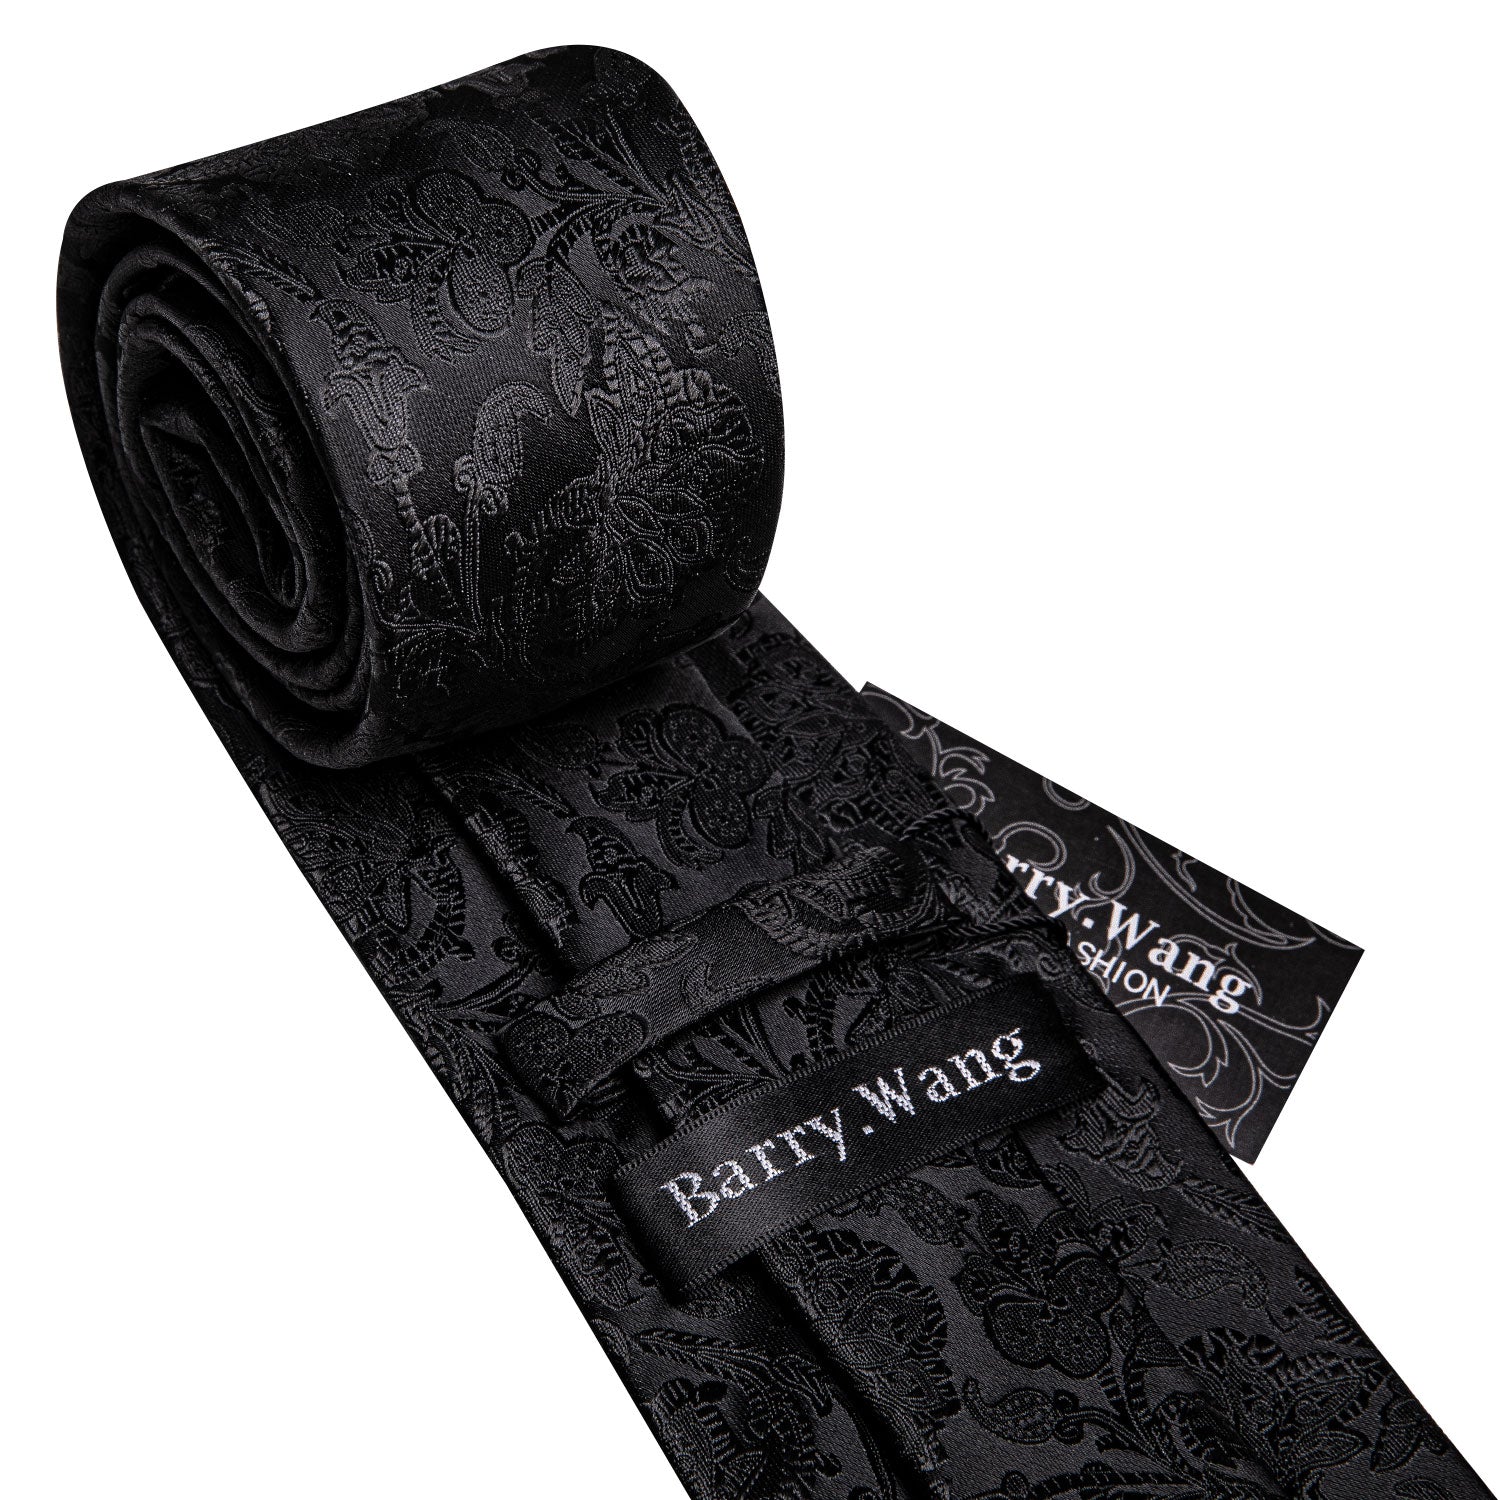 Barry Wang Necktie Black Floral 63 Inches Tie Hanky Cufflinks Set